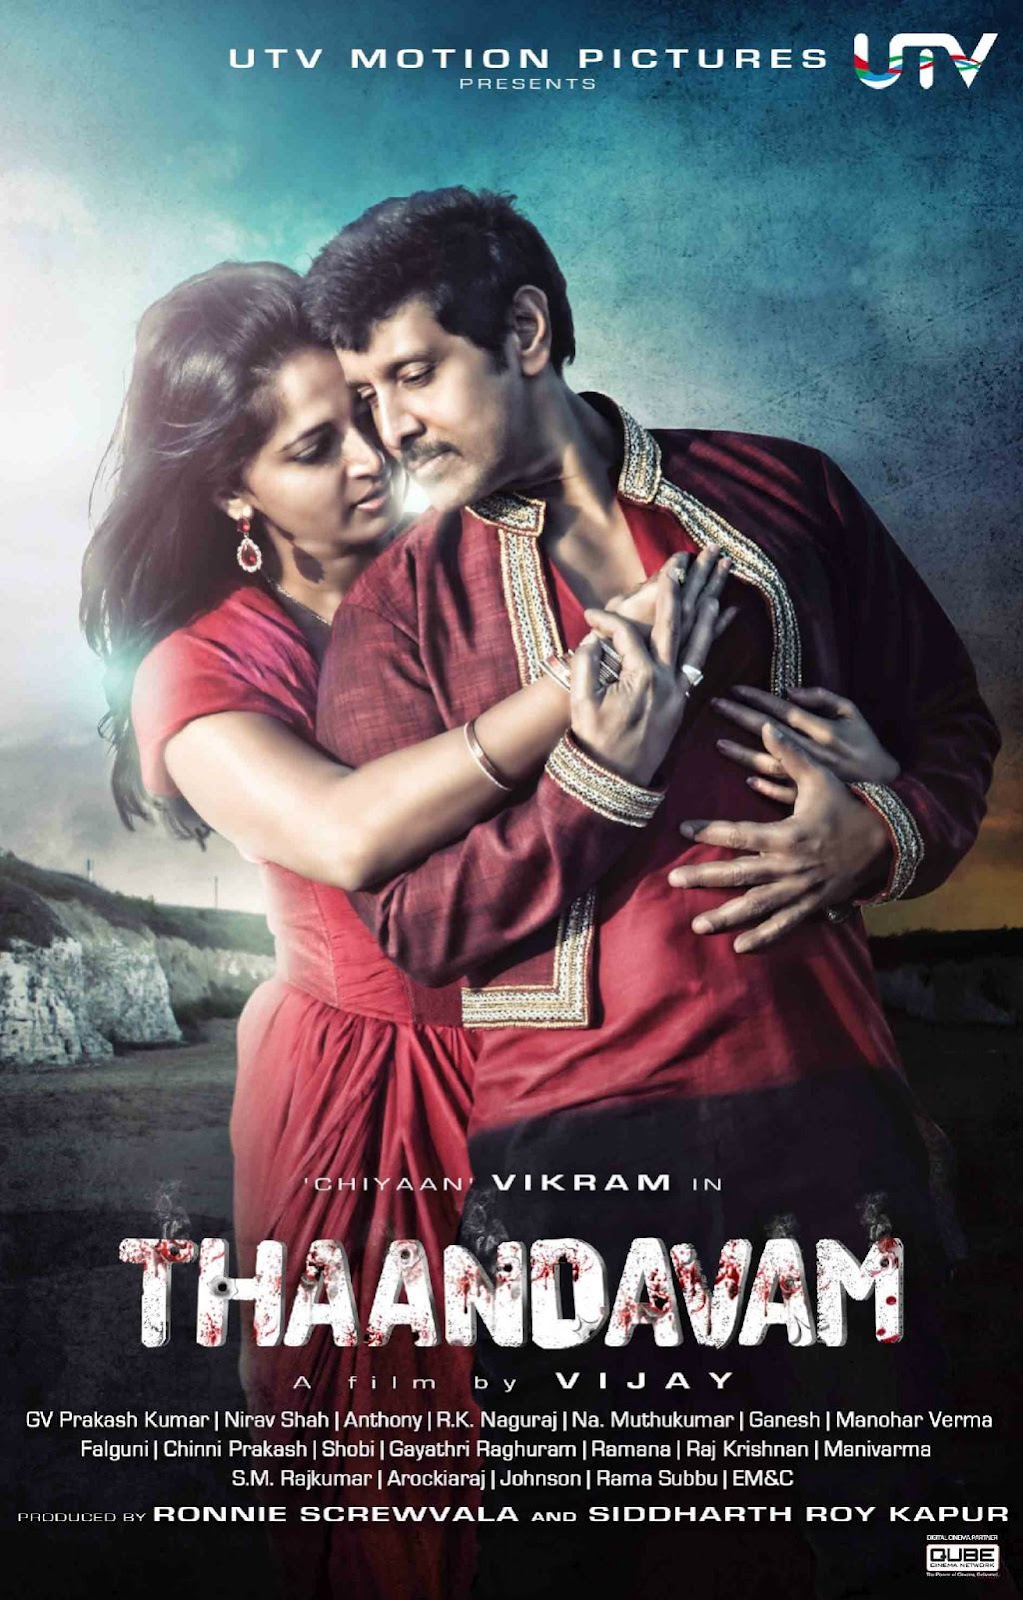 THAANDAVAM (2012) TAMIL con VIKRAM + Jukebox + Sub. Inglés Thandavam+Movie+New+Poster200+(1)